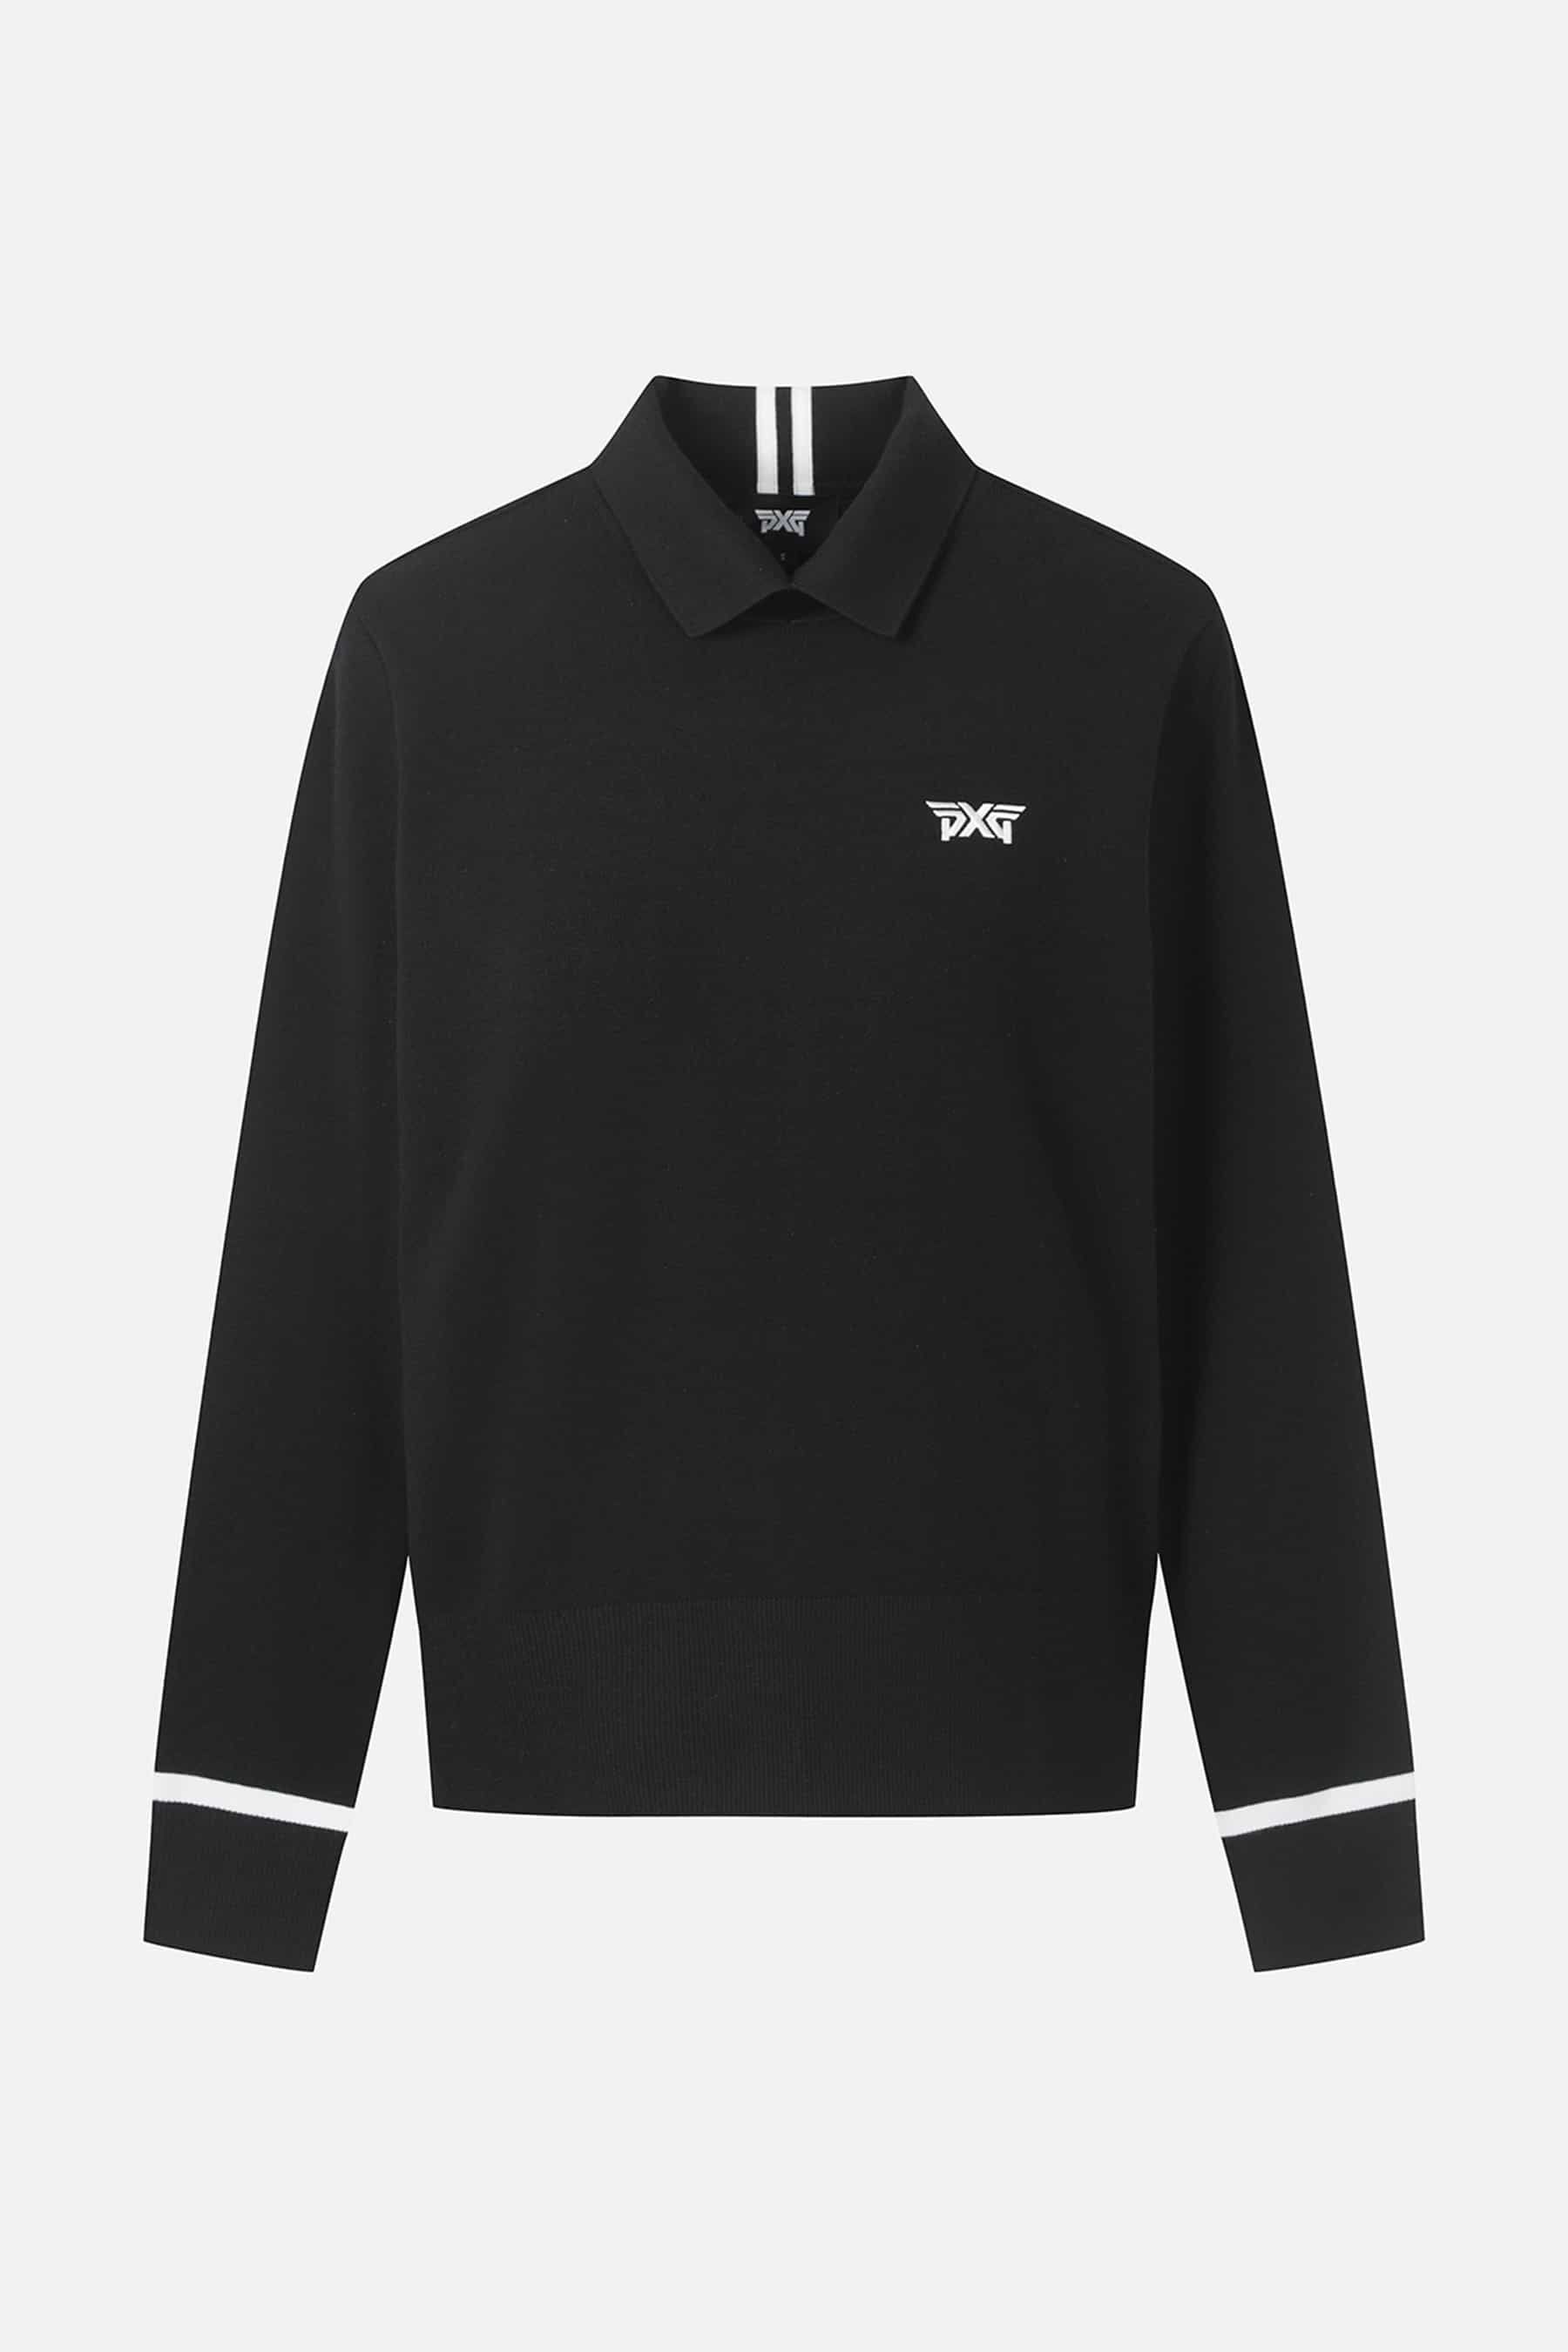 Shop Women's Golf Sweaters, Sweatshirts and Hoodies | PXG JP